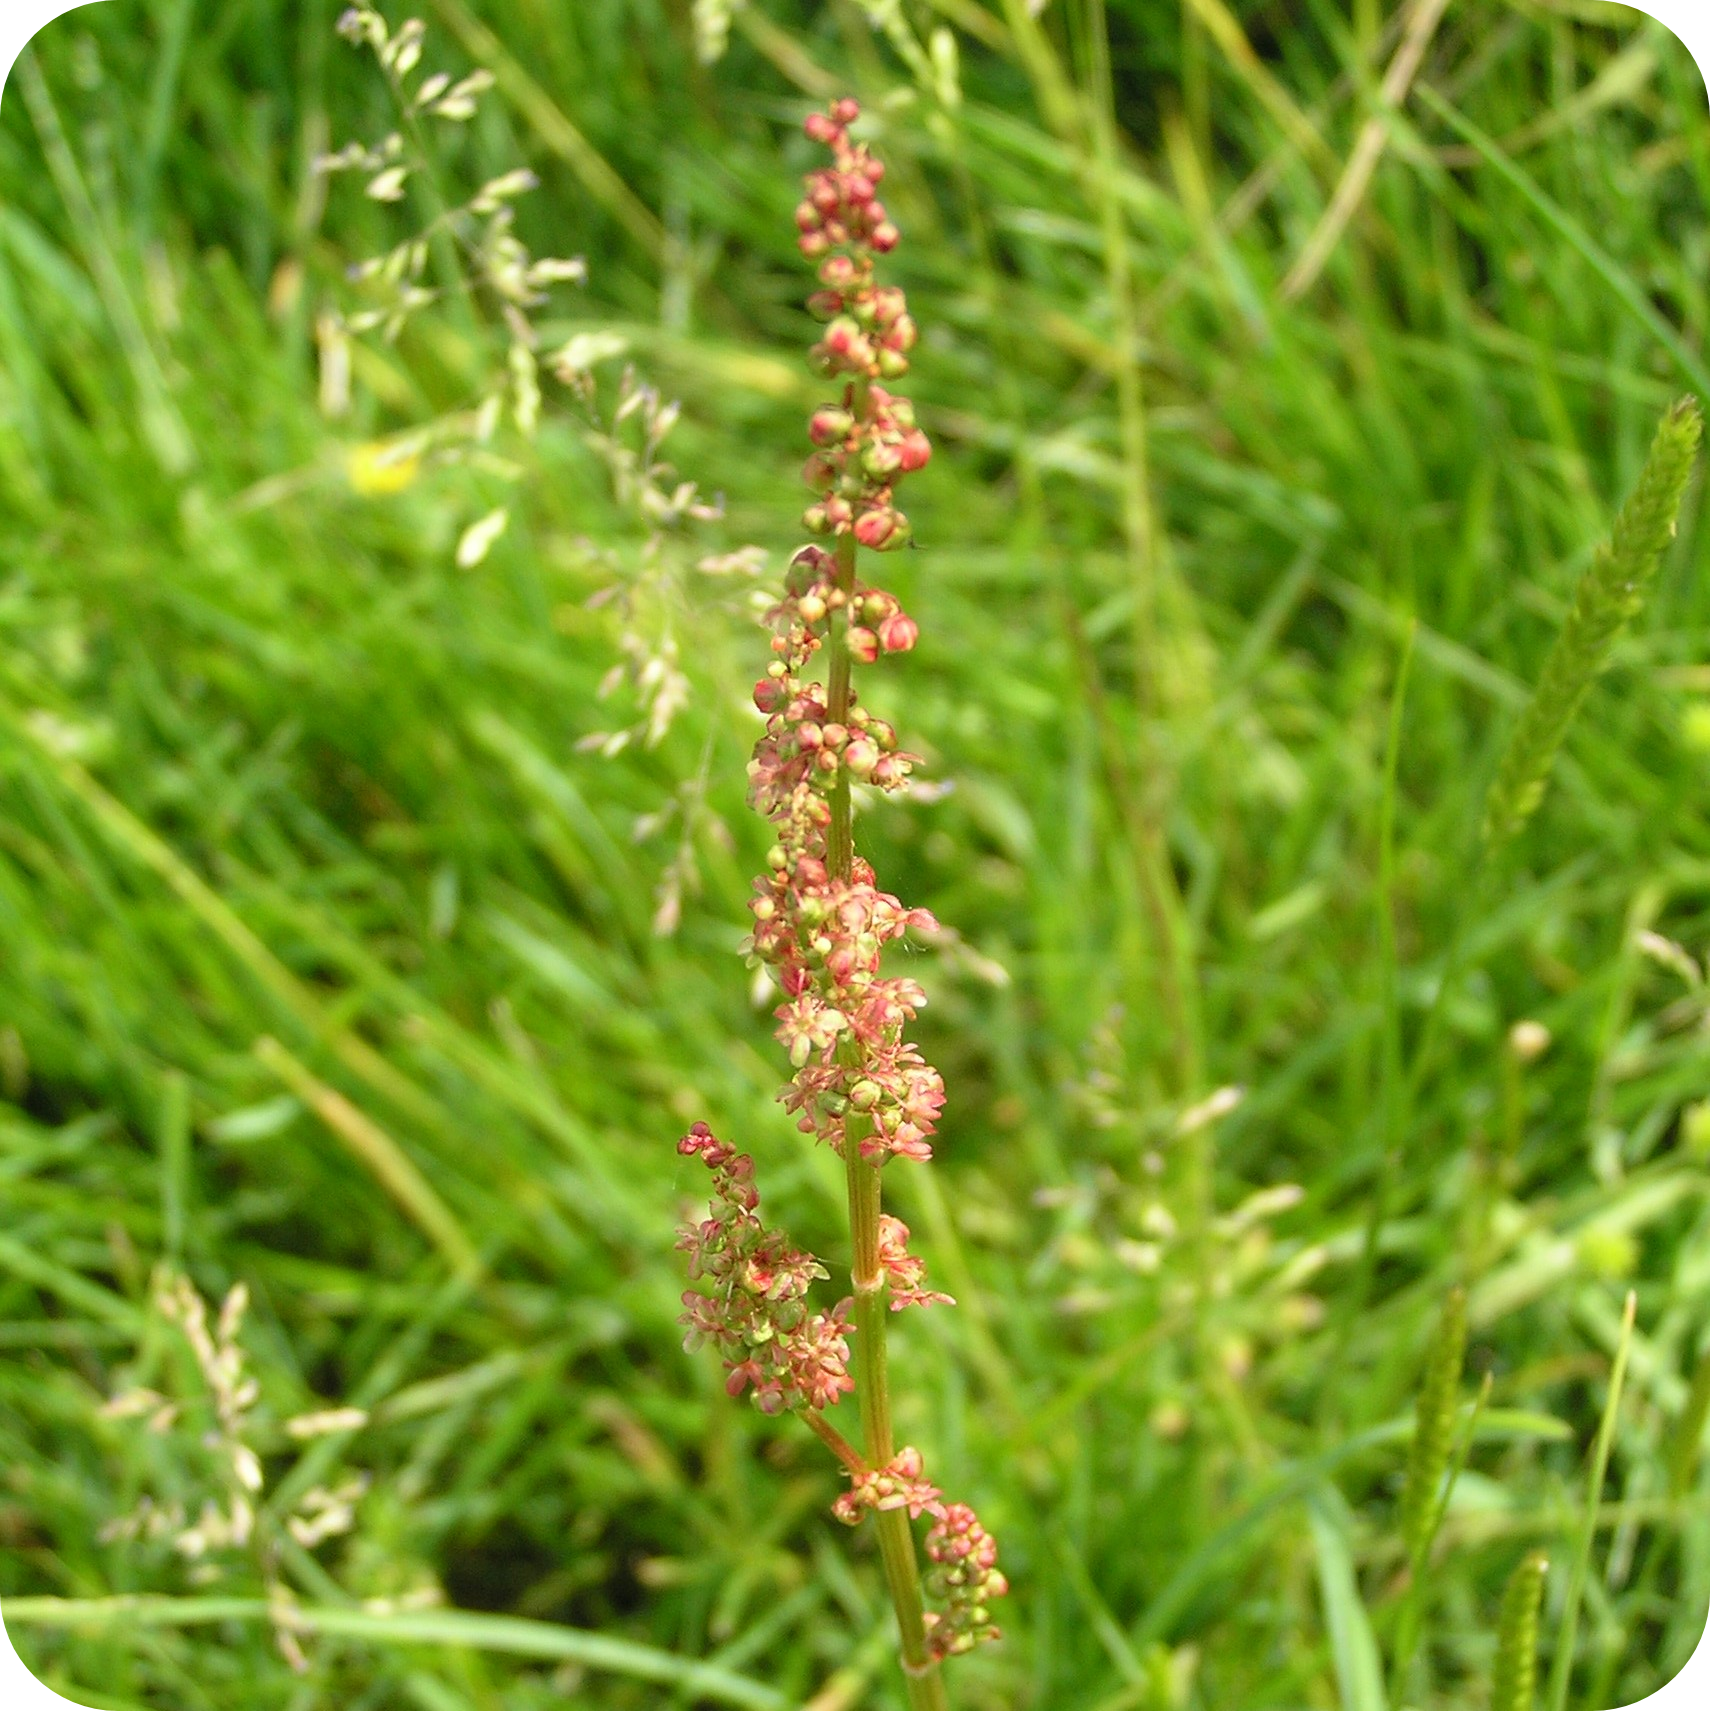 Common Sorrel (Rumex acetosa) plug plants